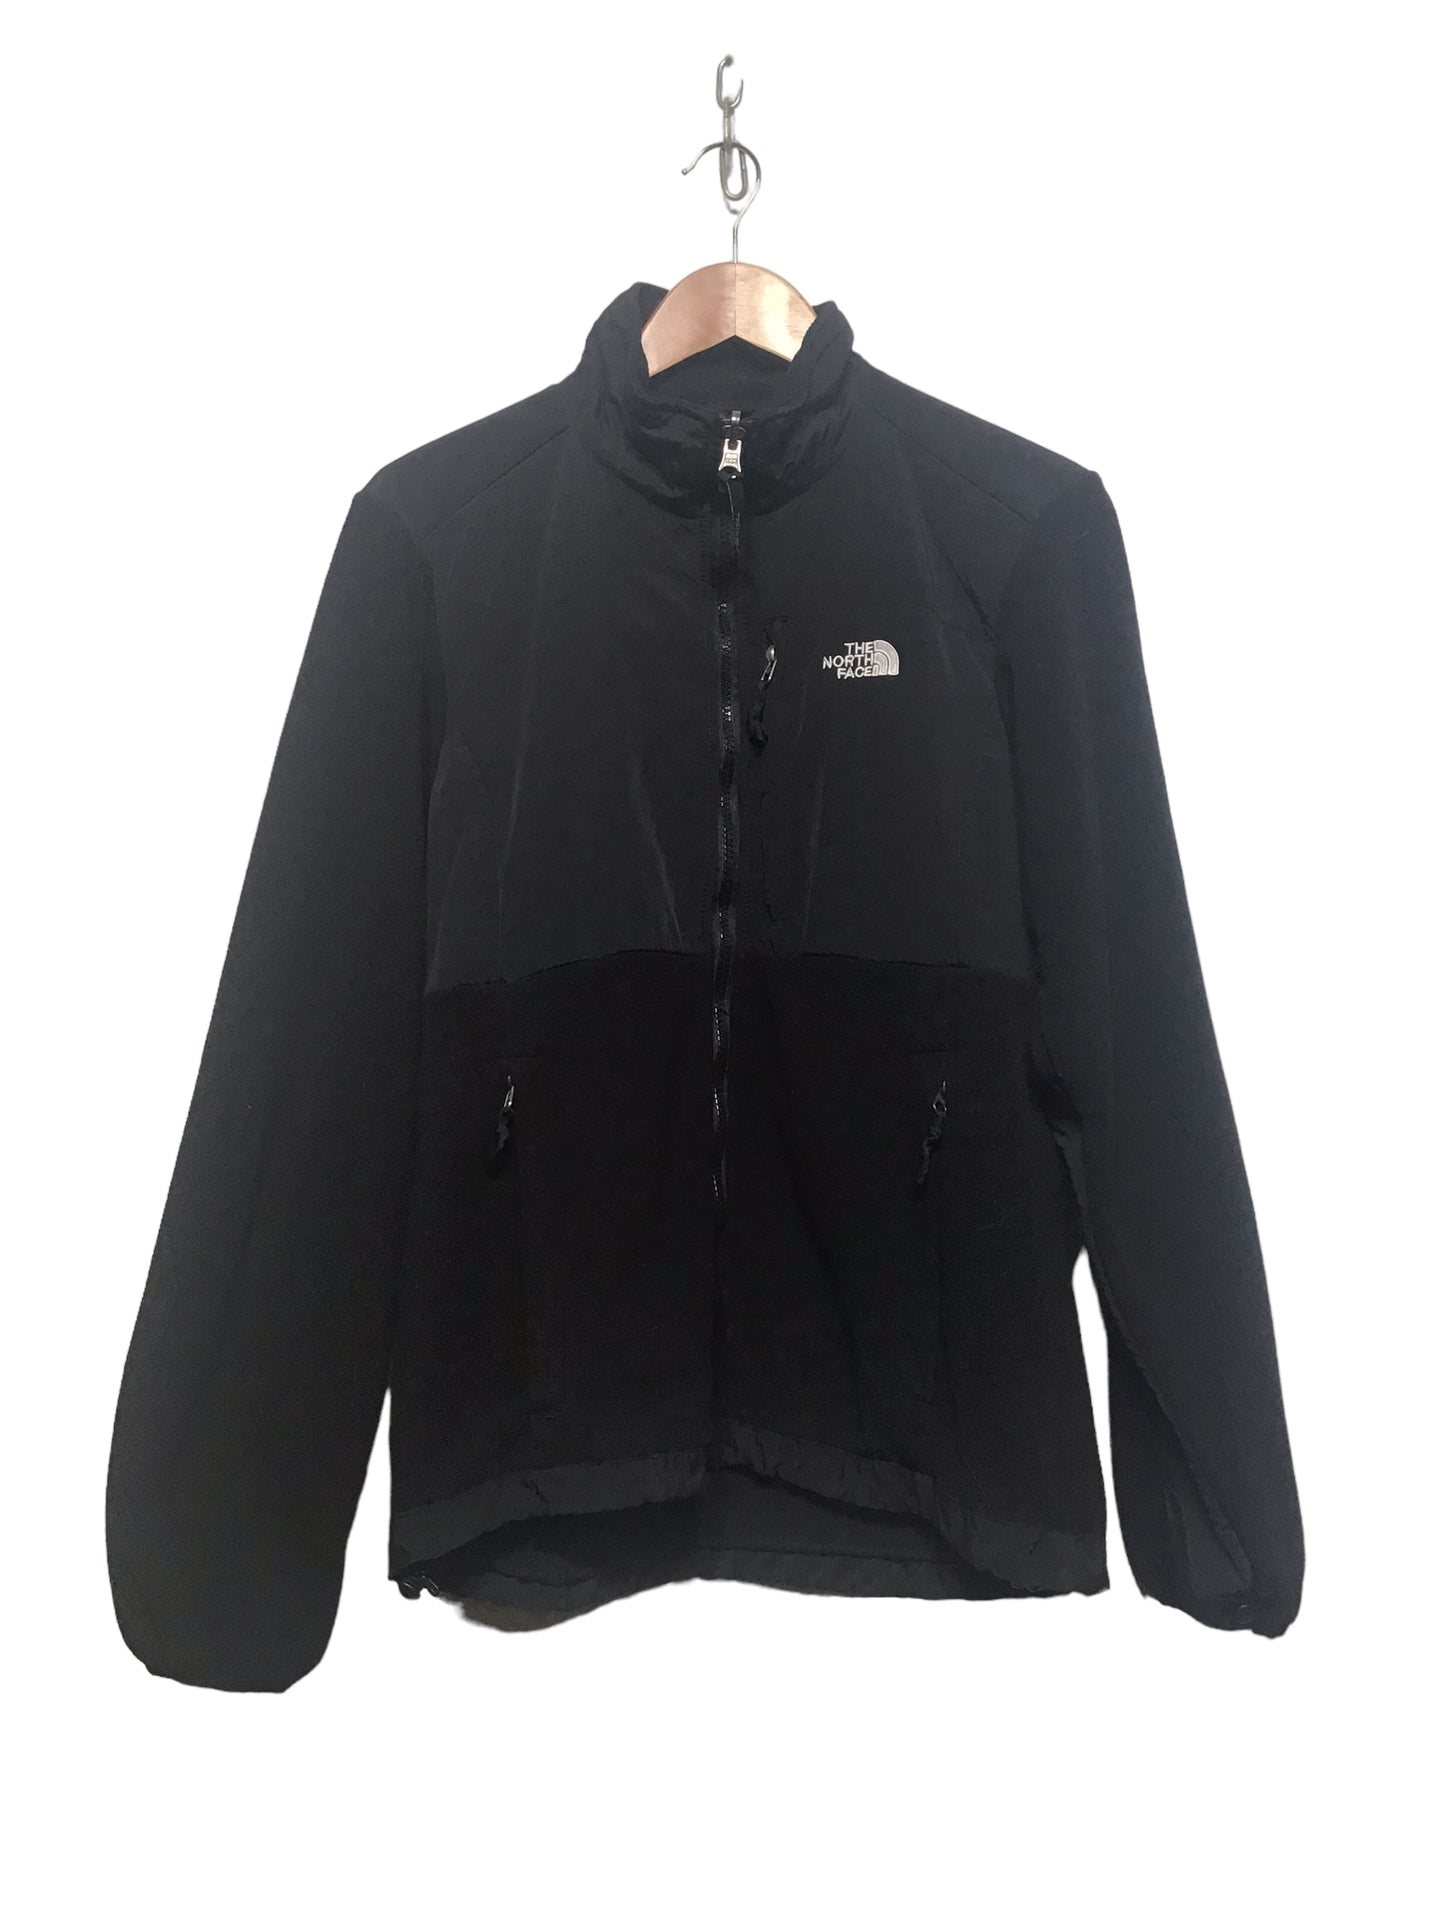 The North Face Black Denali Jacket (Women’s Size L)